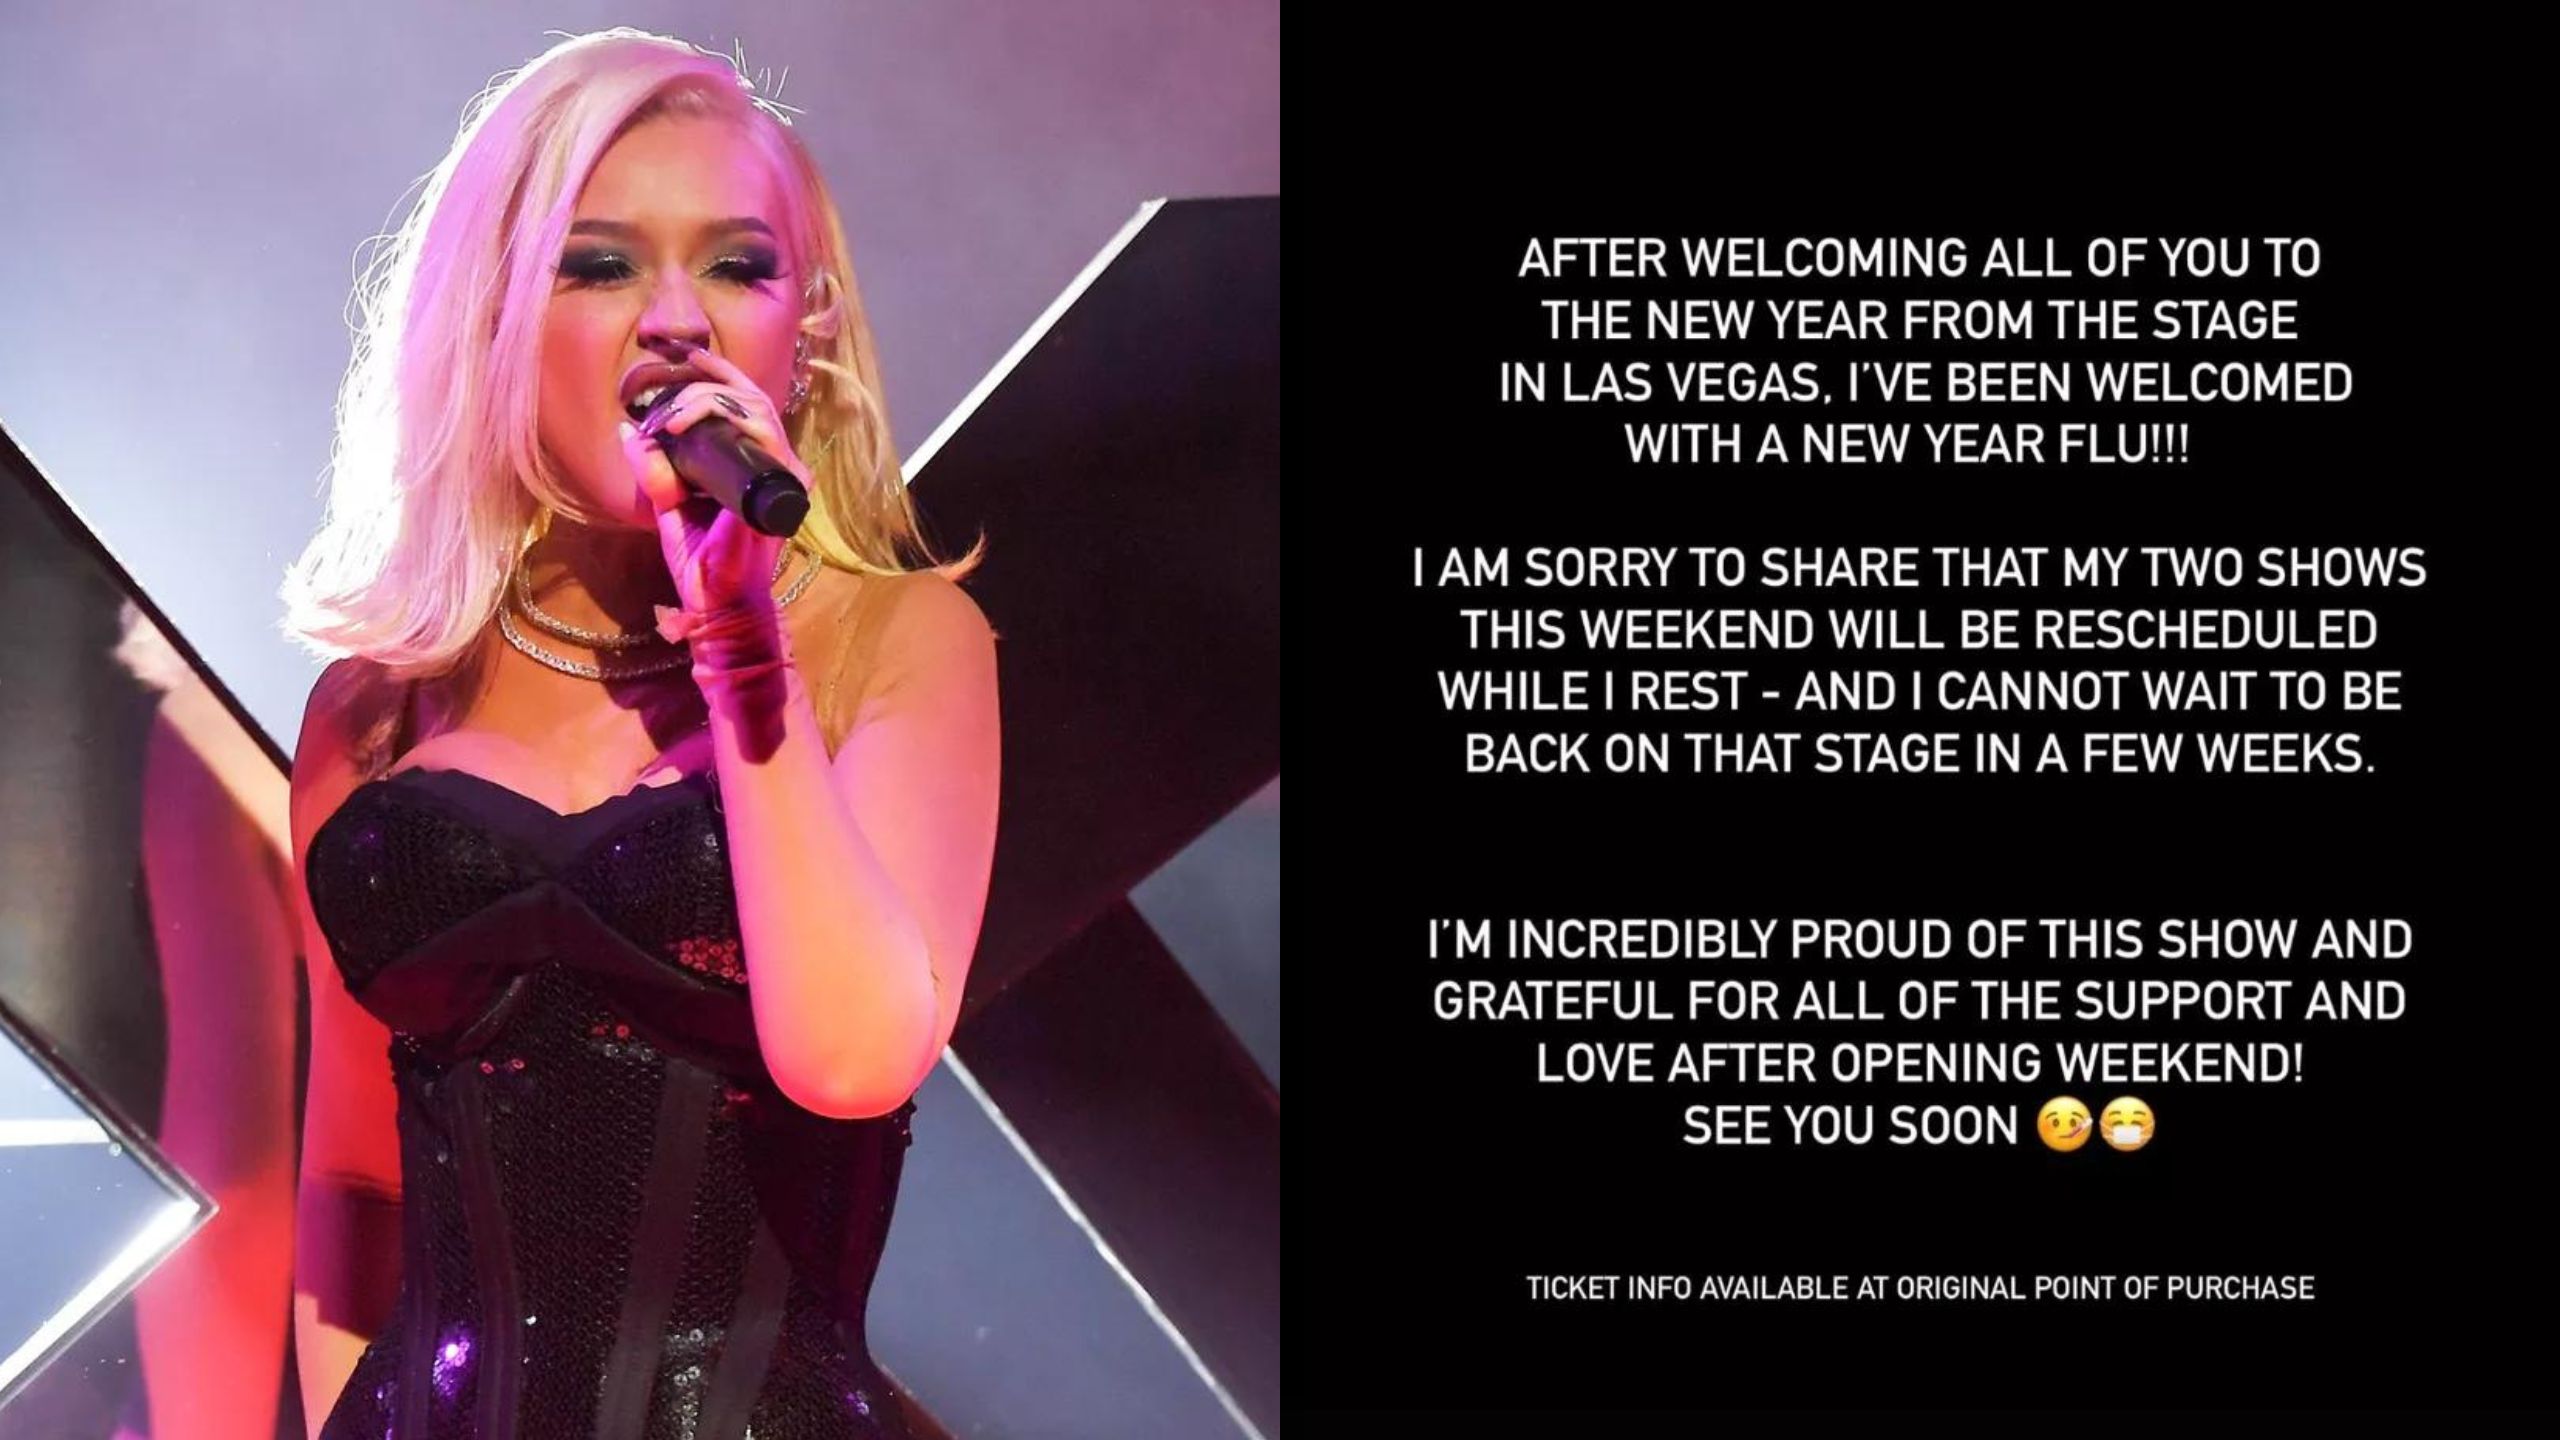 Legendary Singer Christina Aguilera Postpones Las Vegas Shows Due to